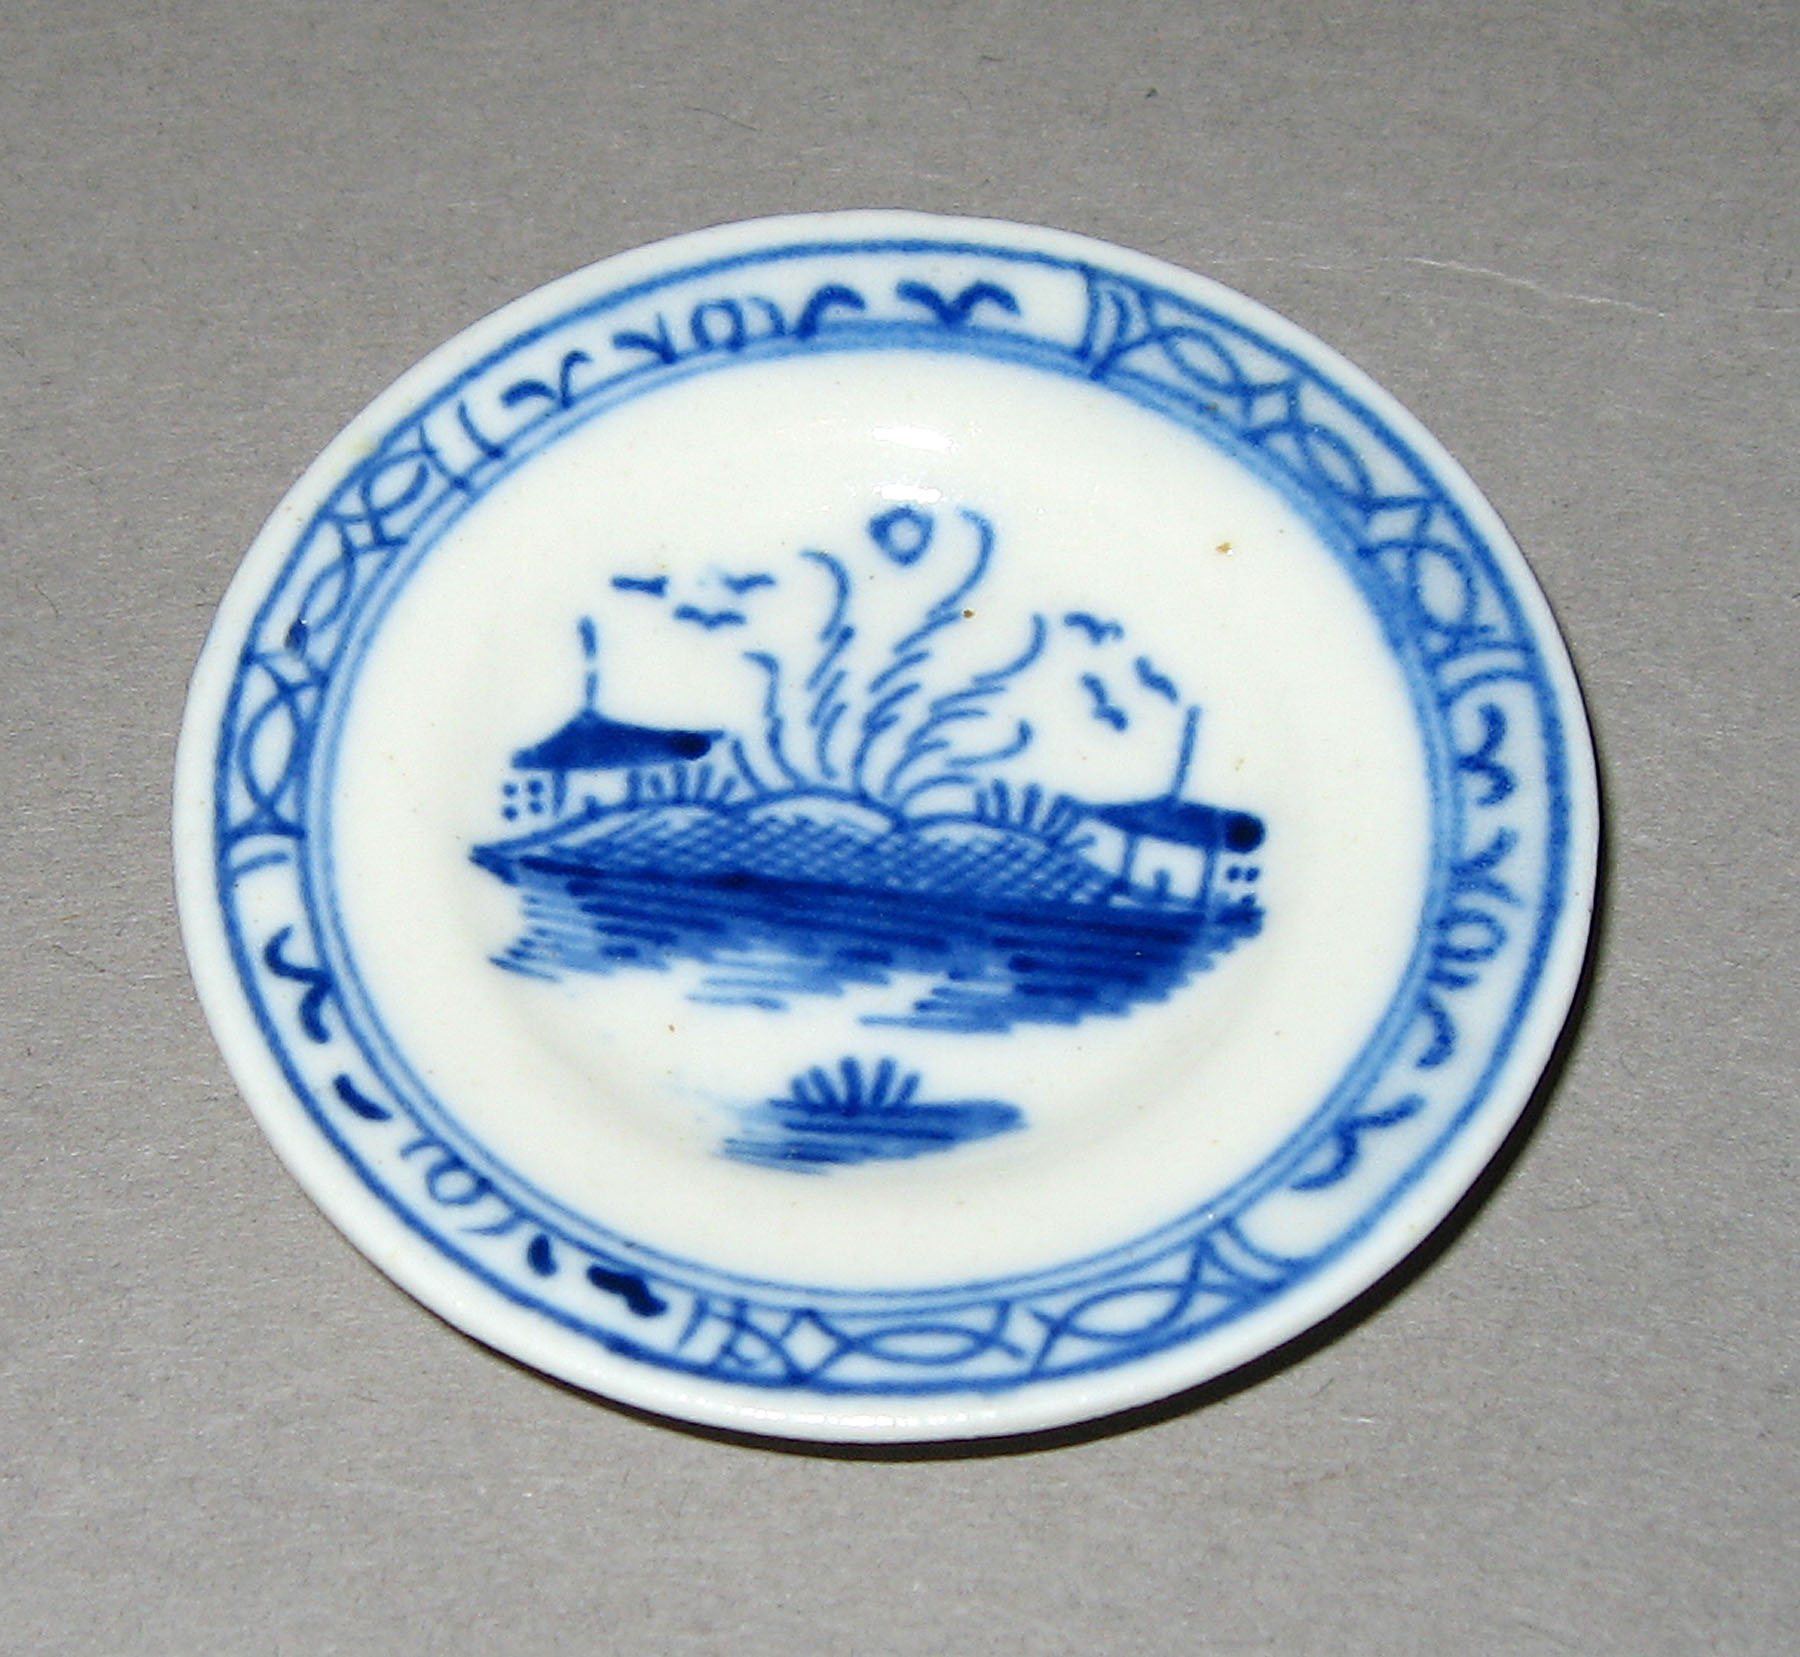 1965.0560.003 Miniature plate